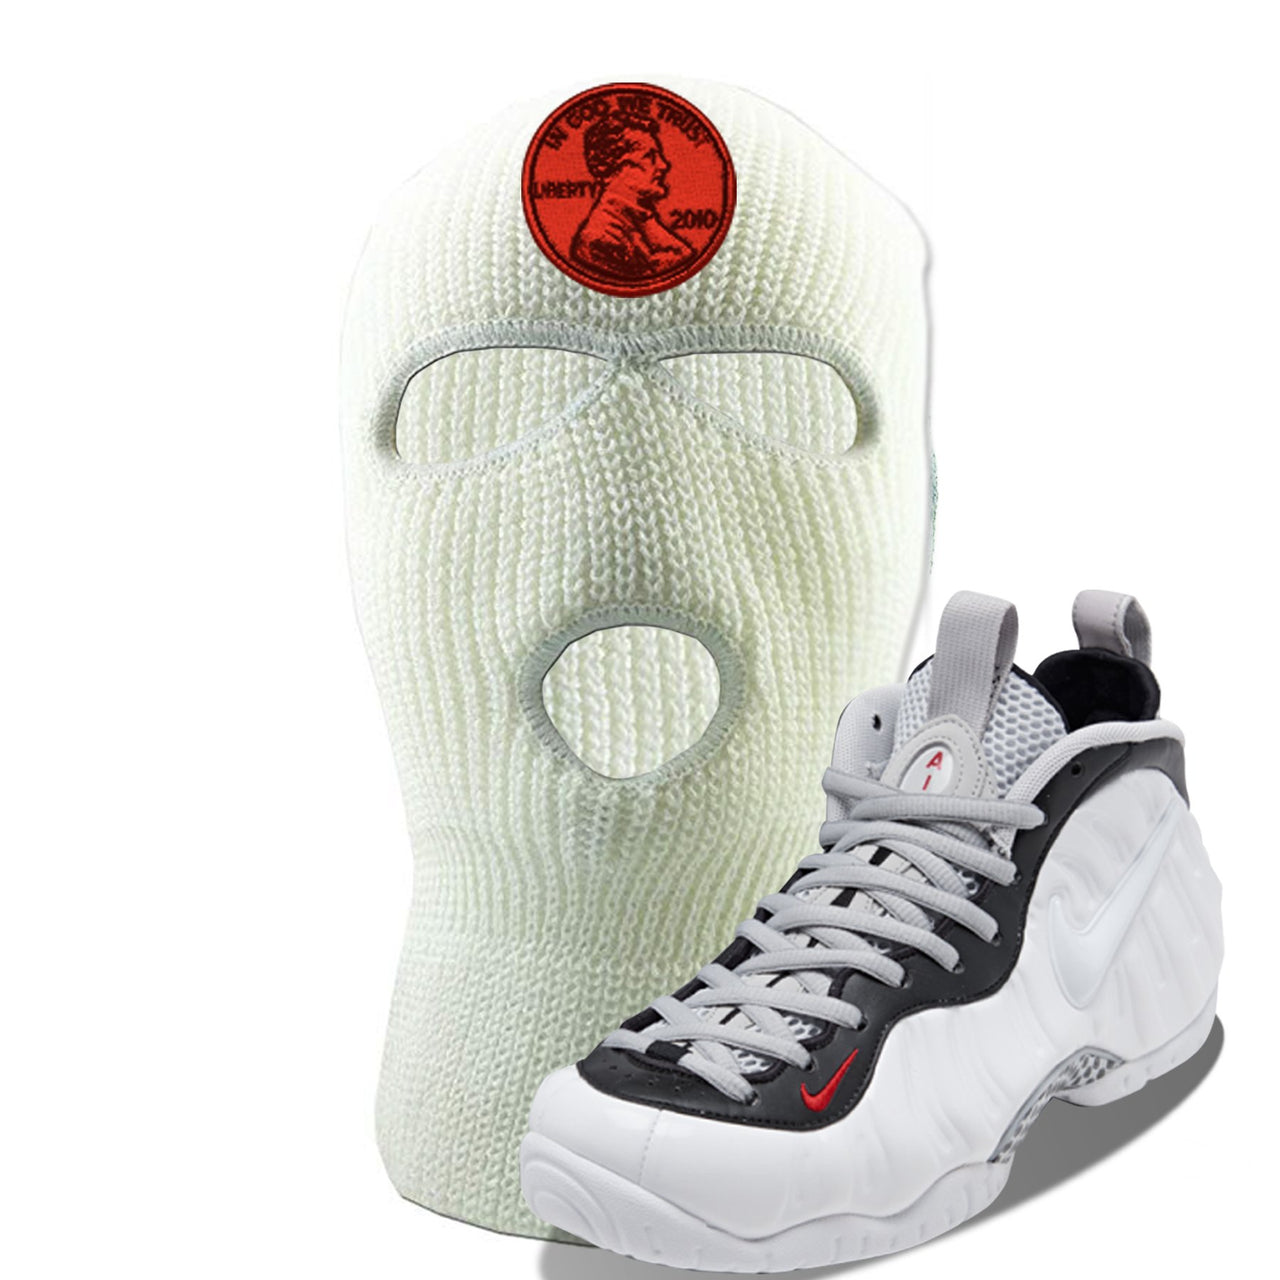 Foamposite Pro White Black University Red Sneaker White Ski Mask | Winter Mask to match Nike Air Foamposite Pro White Black University Red Shoes | Penny